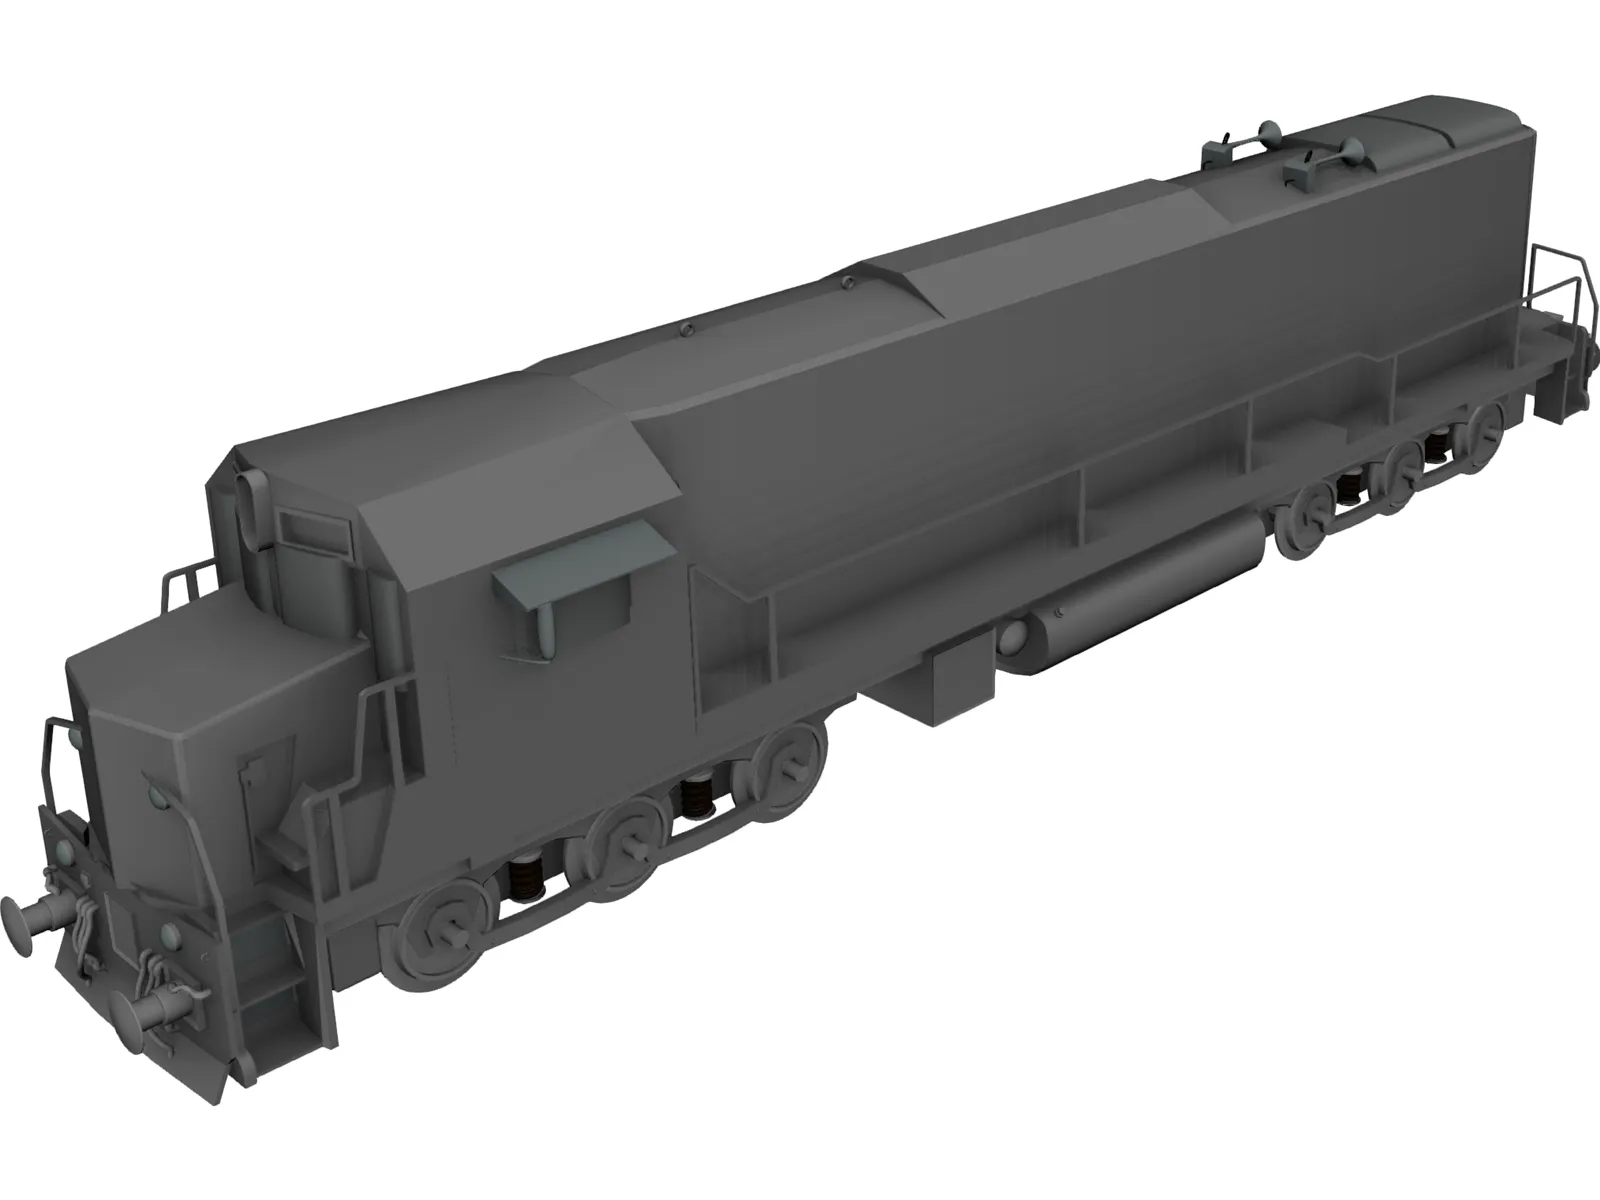 Train SD4 3D Model